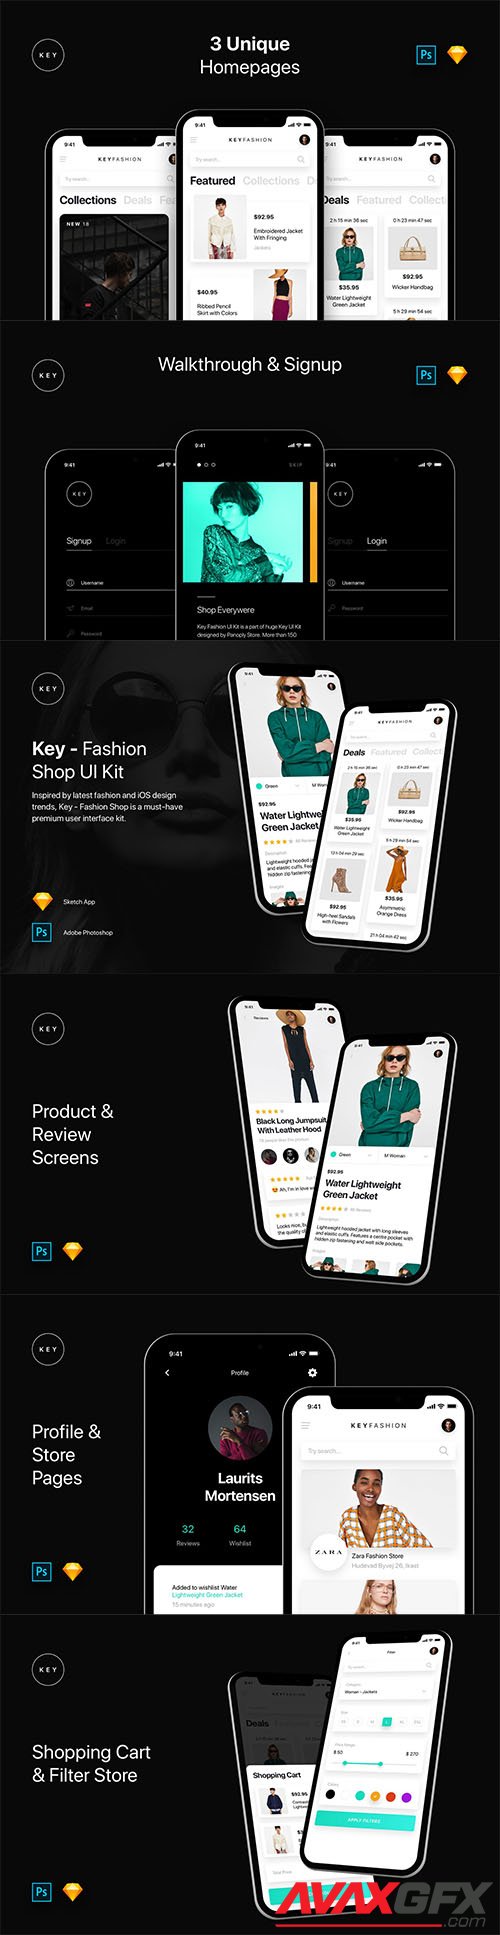 Key - Fashion Shop UI Kit